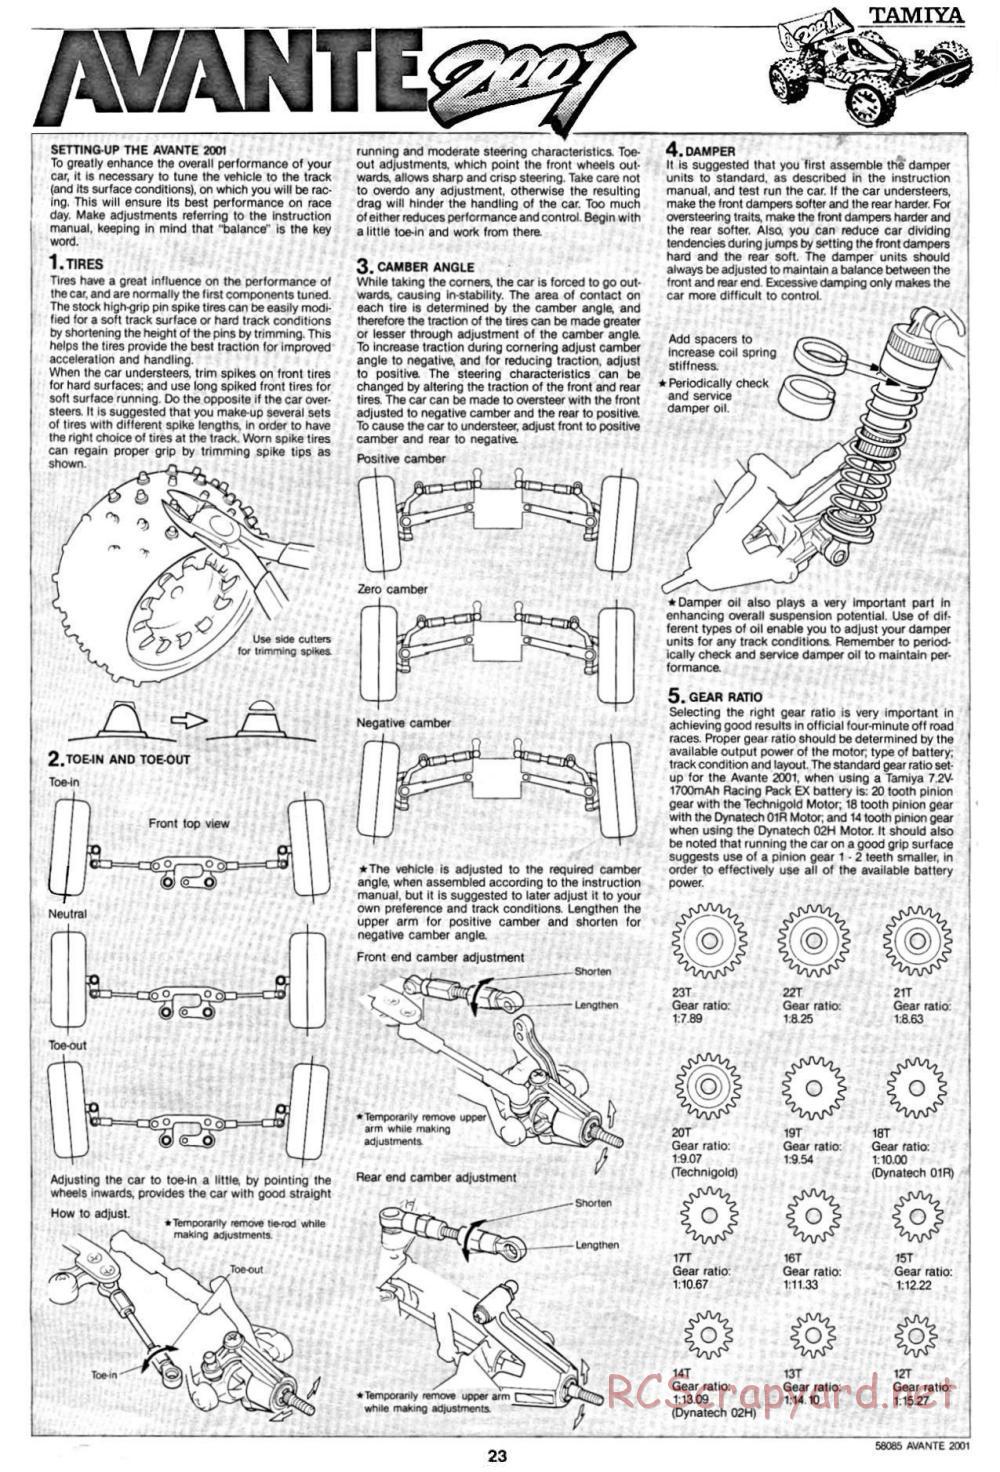 Tamiya - Avante 2001 - 58085 - Manual - Page 23